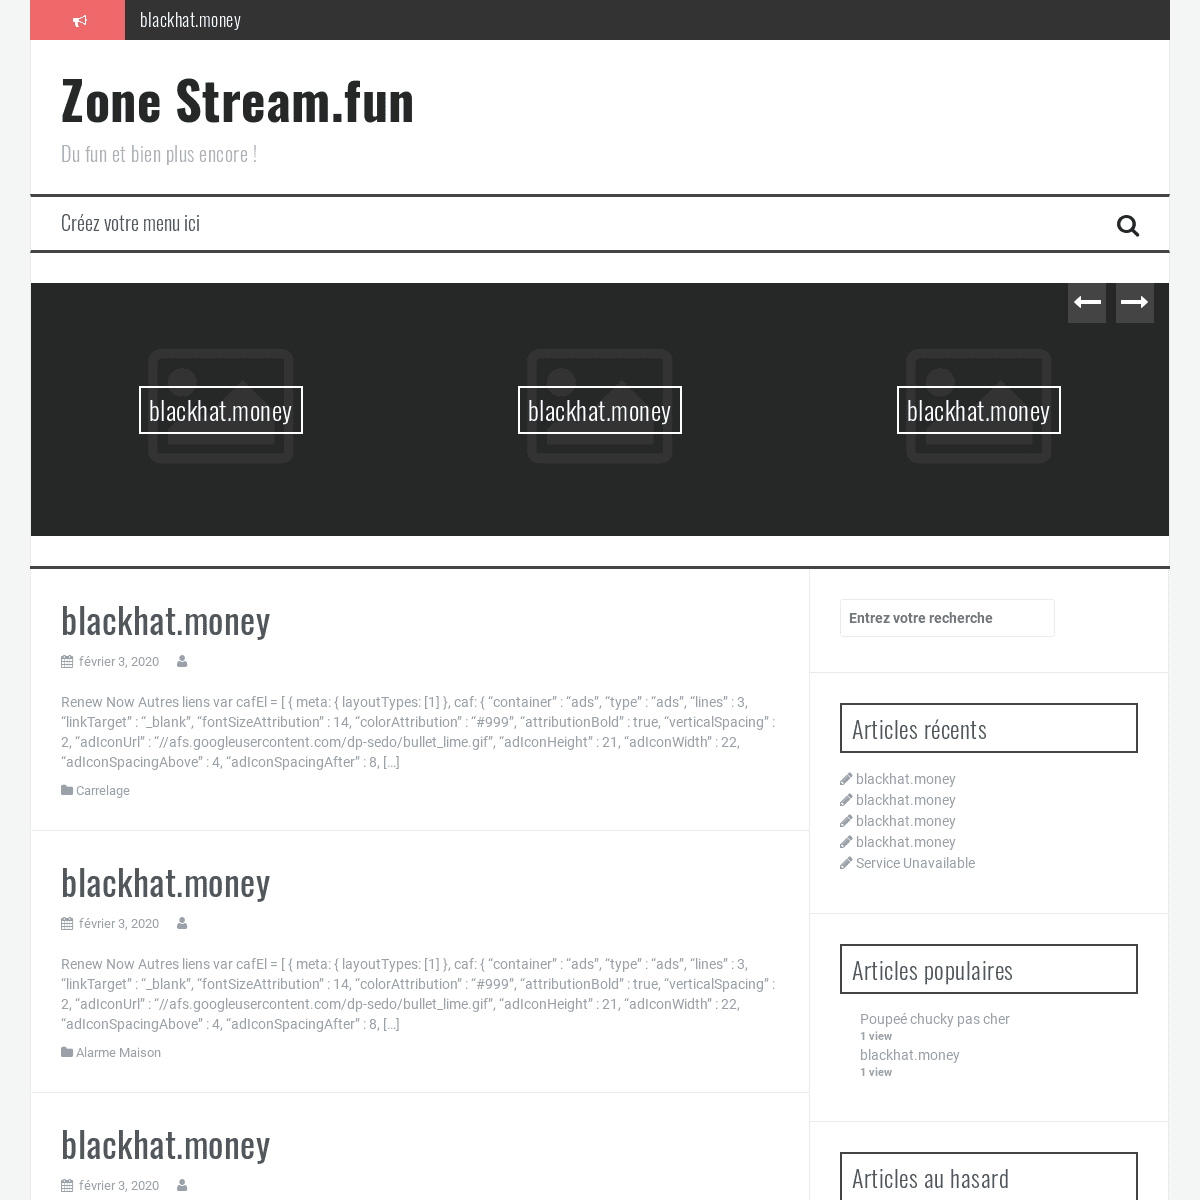 A complete backup of zone-stream.fun